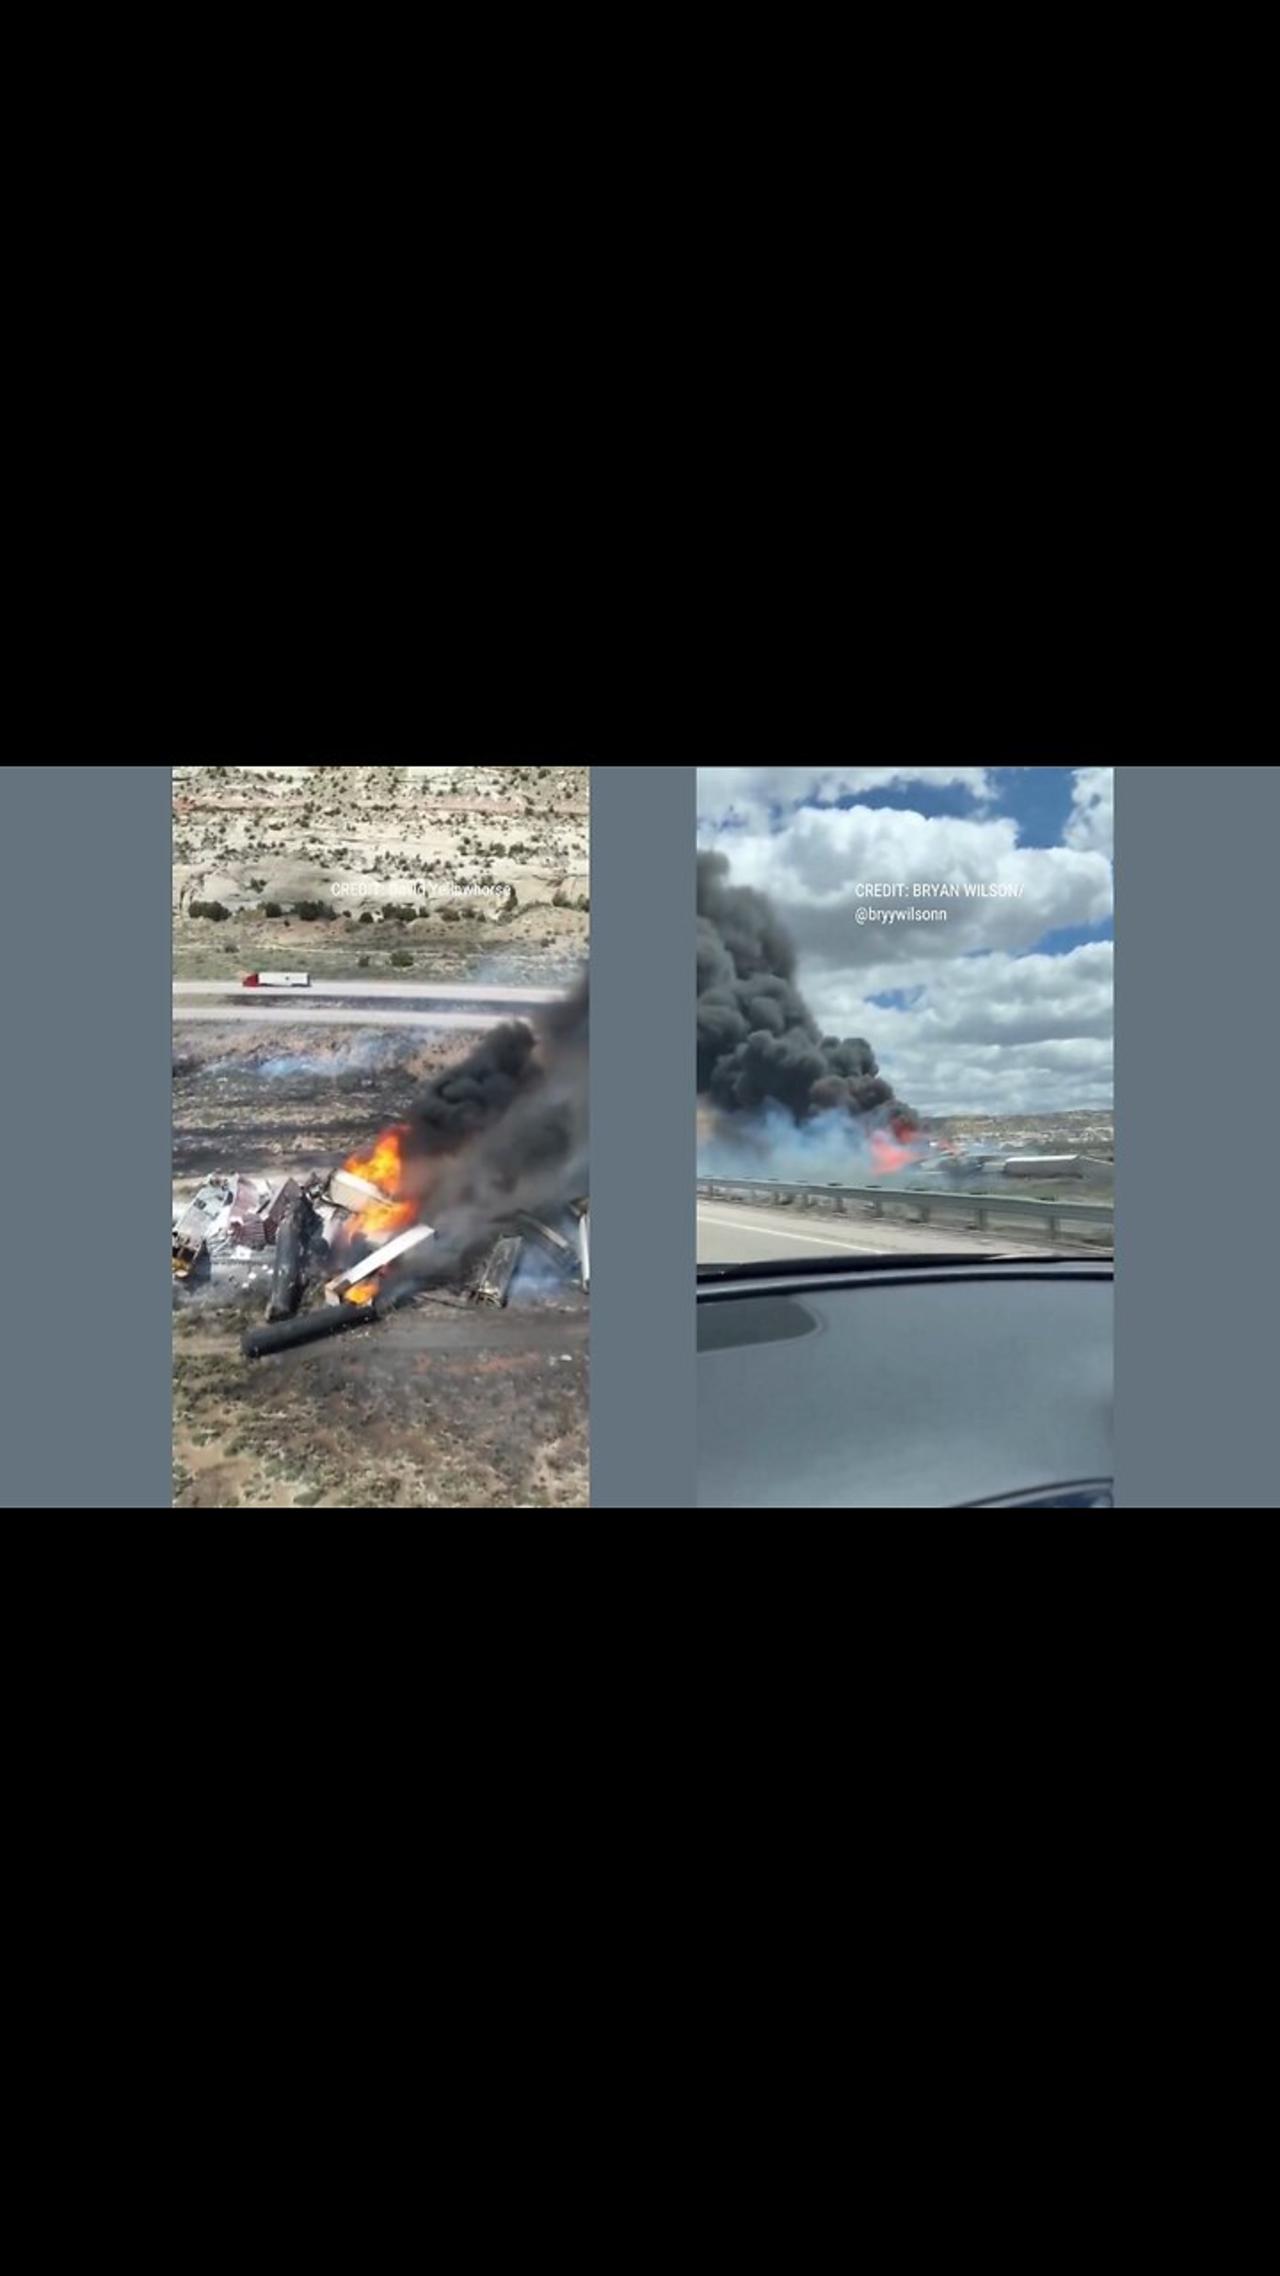 ⚠️ Train derailment near Arizona / New Mexico border. Propane tanks on multiple cars.